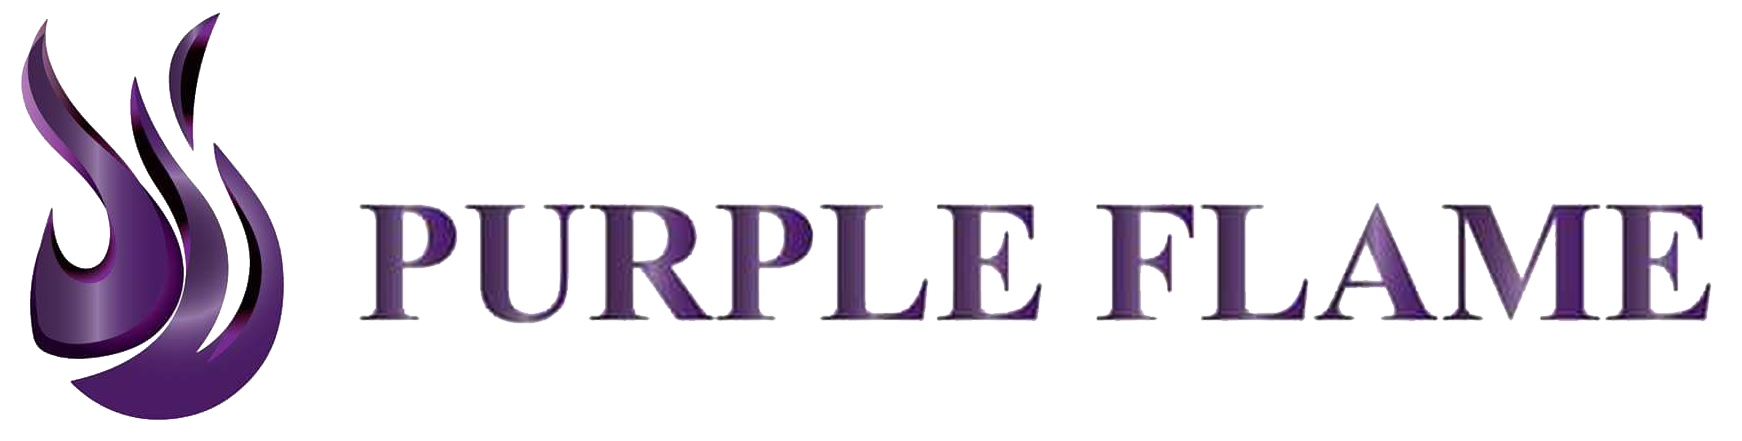 Purple Flame logo